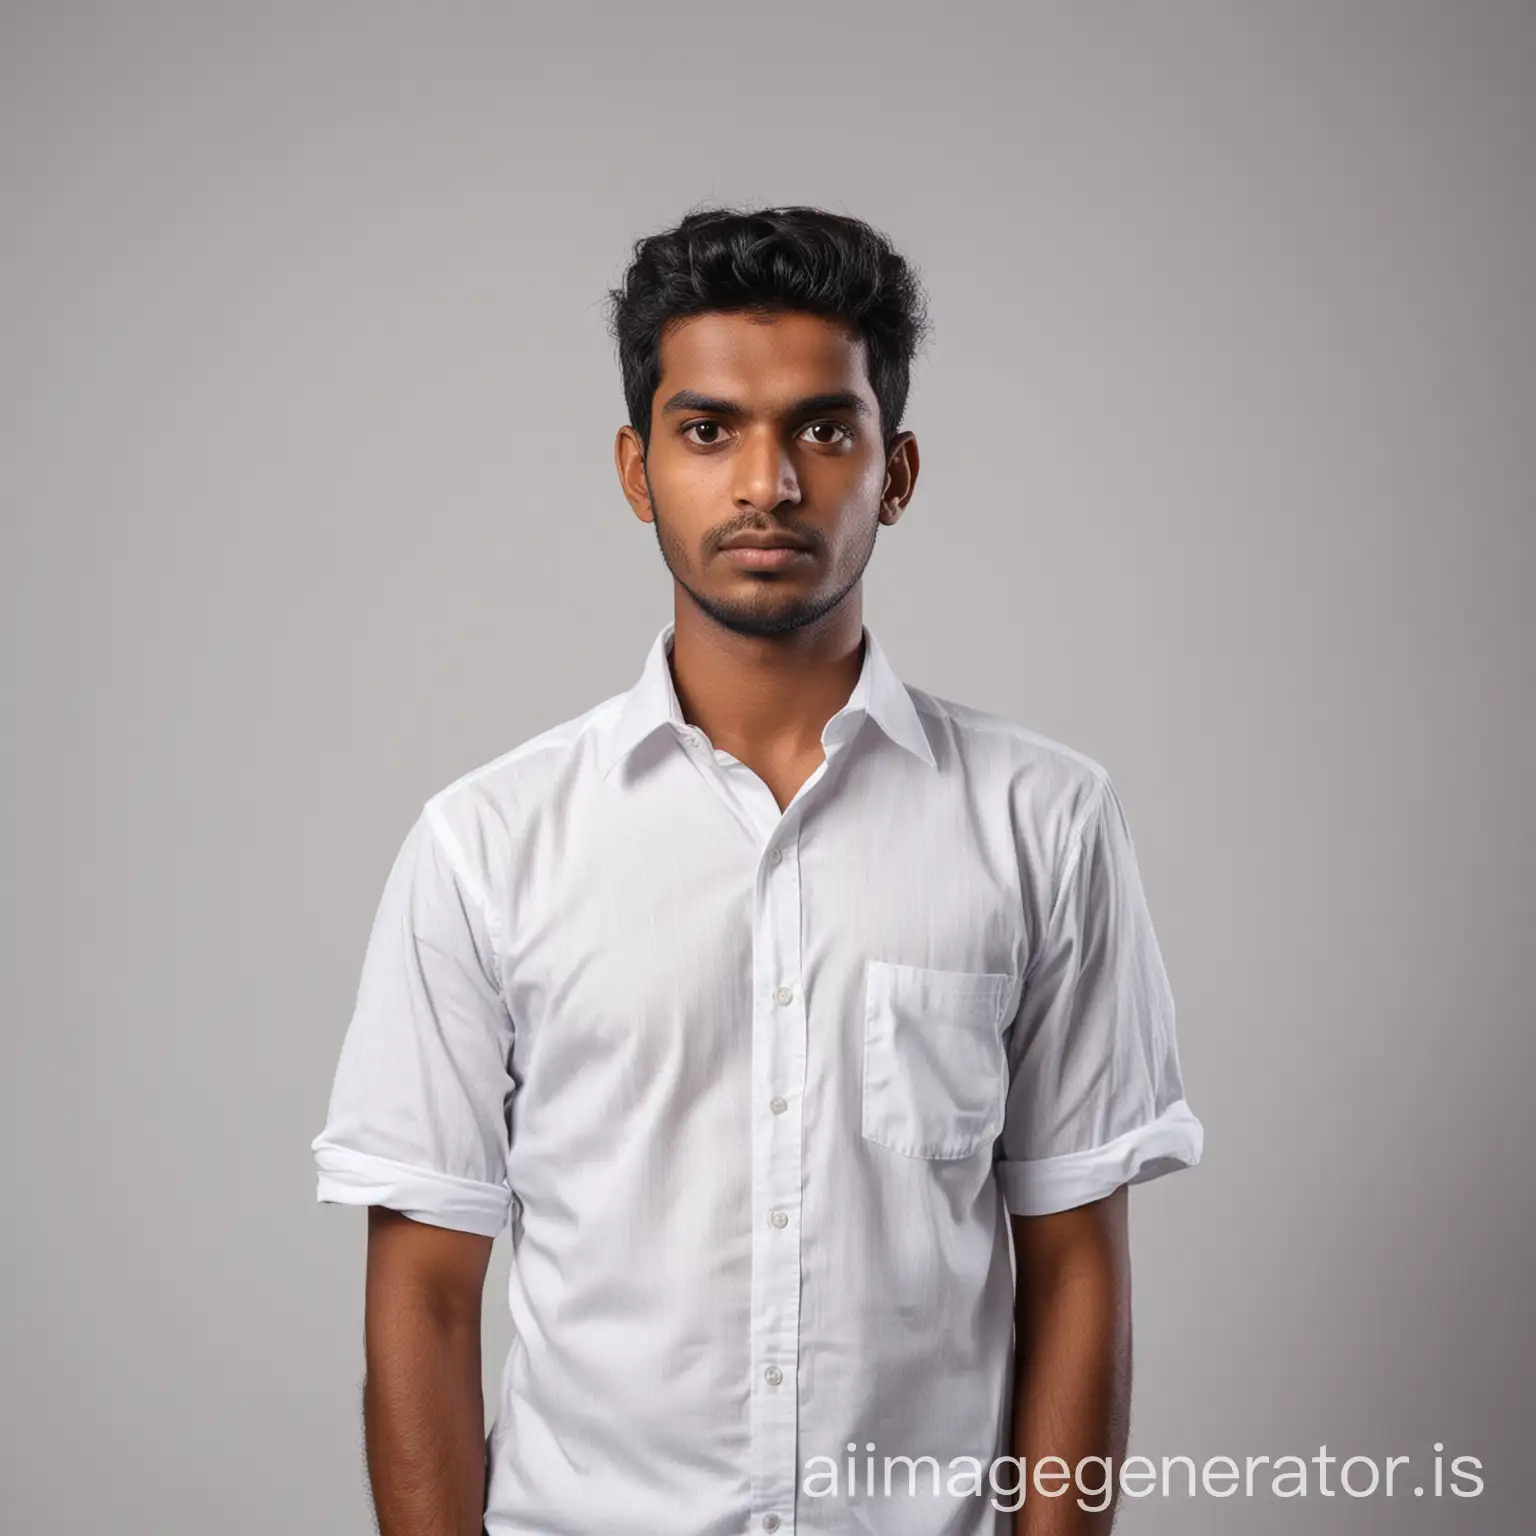 Serious-Sri-Lankan-Man-Posing-for-Passport-Photo-in-White-Shirt-25-years-old